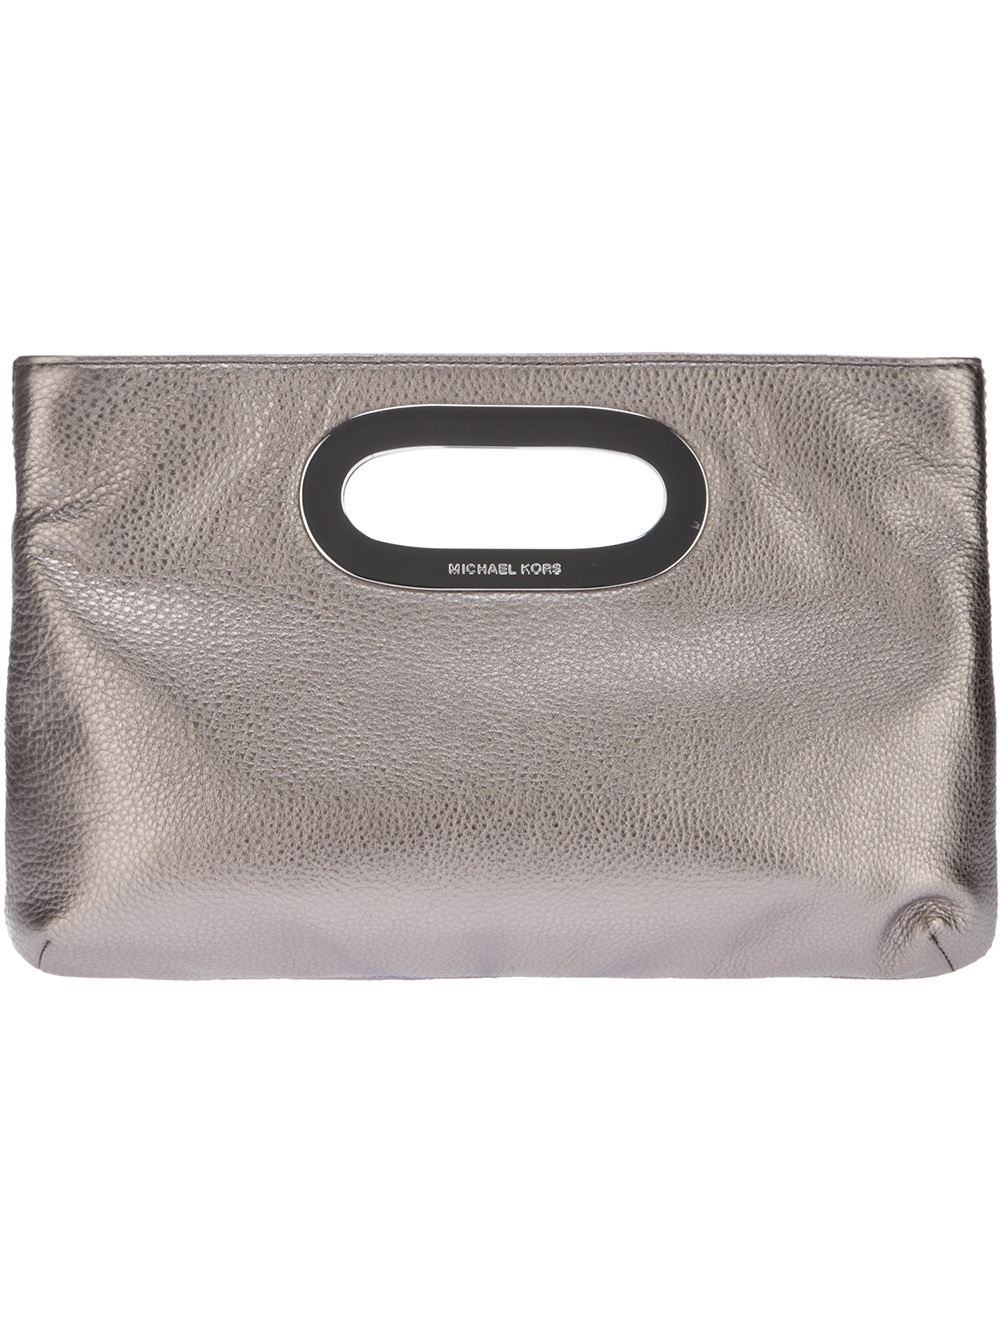 MICHAEL Michael Kors Berkley Clutch Bag in Silver (Metallic) - Lyst